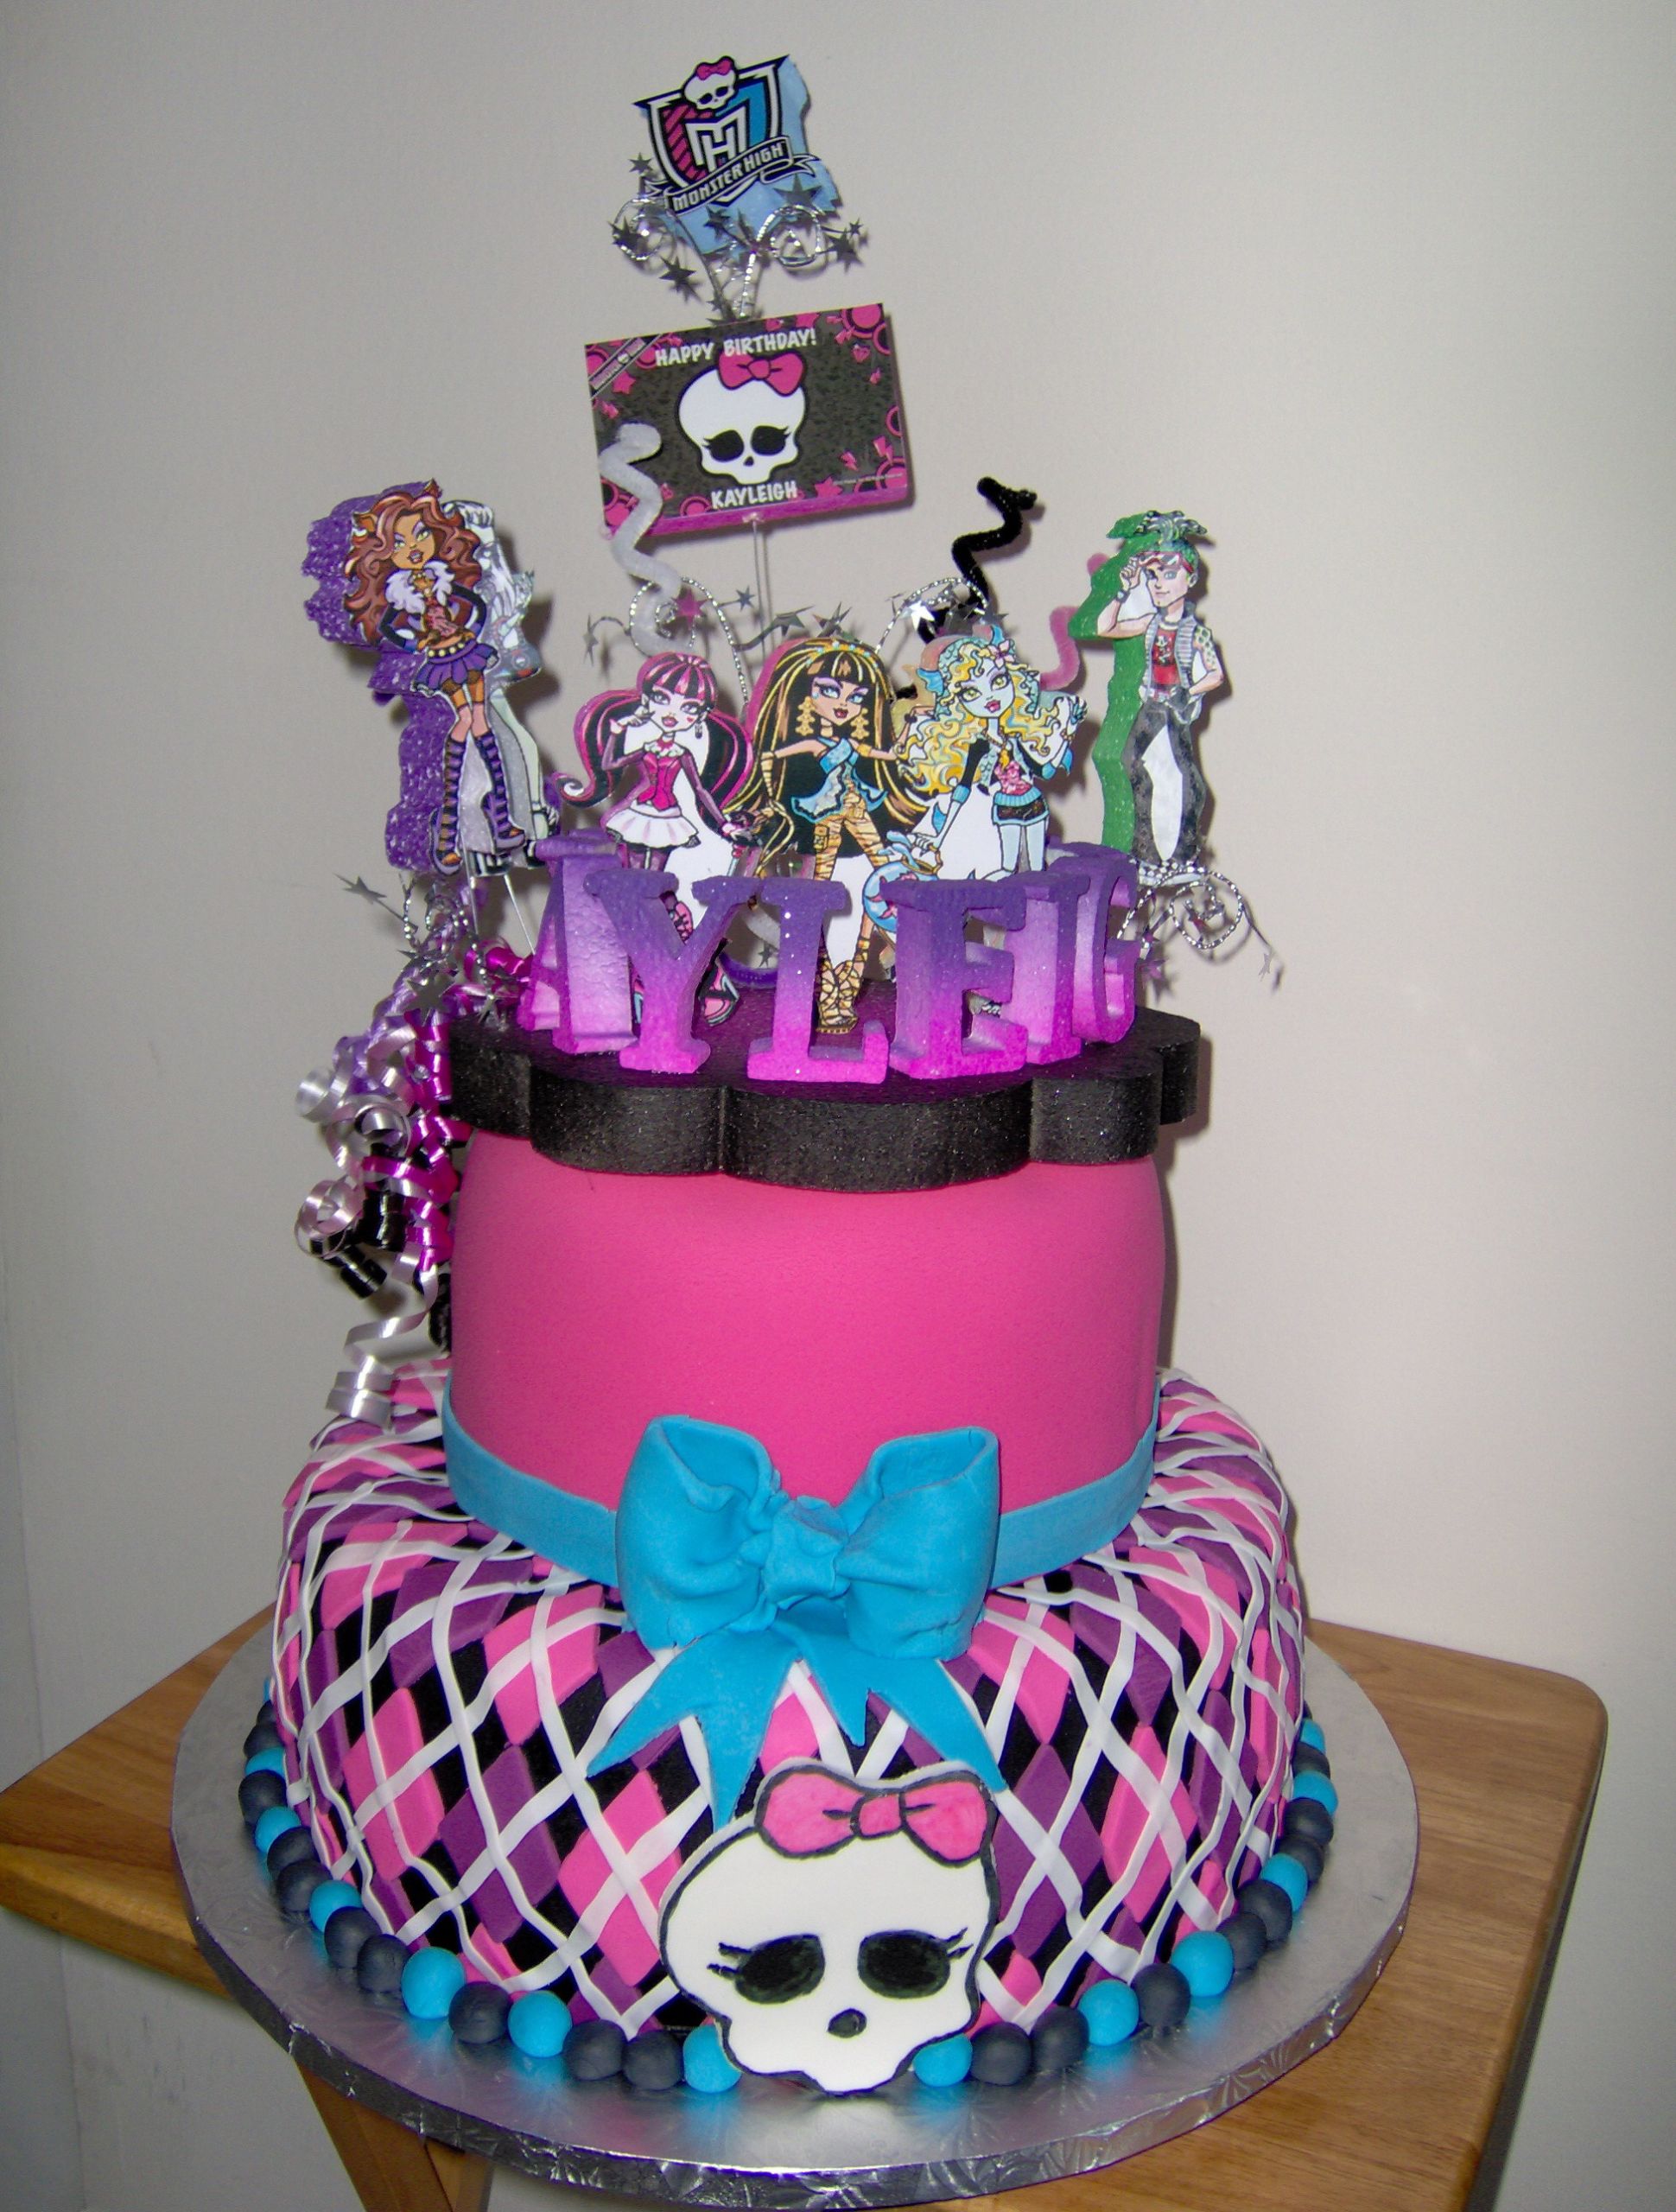 Monster High Birthday Cake
 25 Monster High Cake Ideas and Designs EchoMon